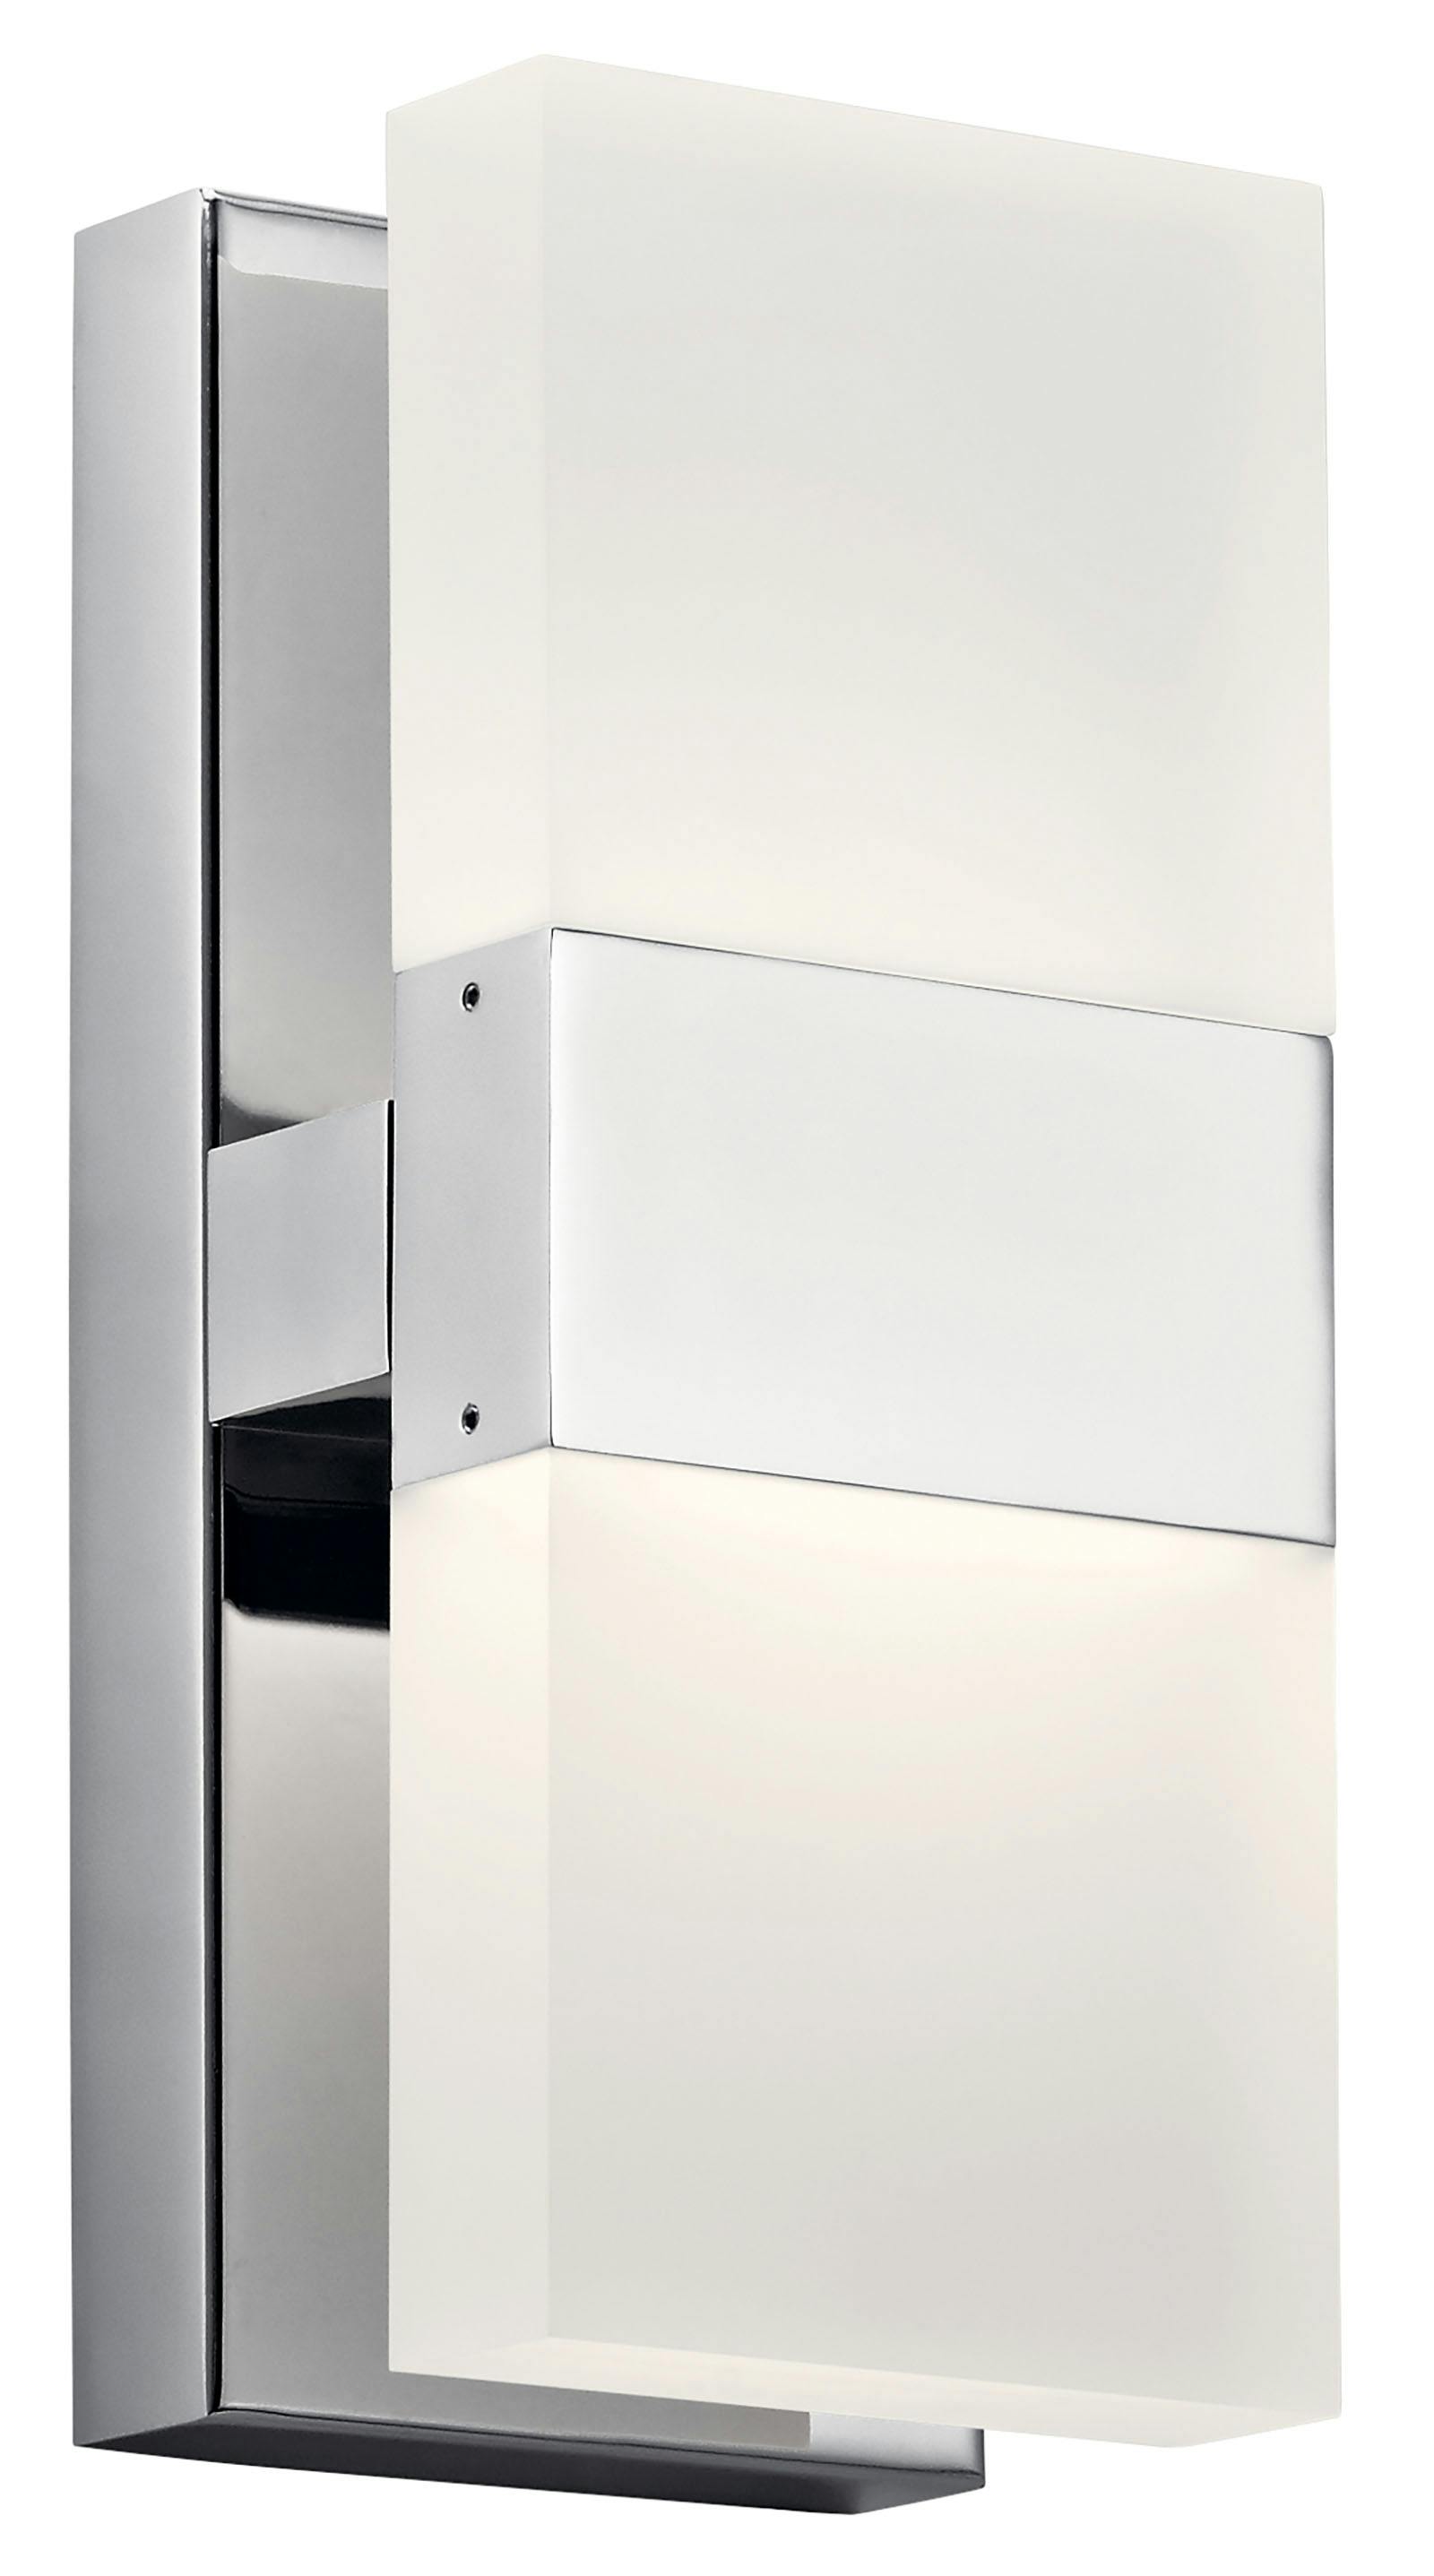 Haiden™ 24.5" LED Vanity Light Chrome hung vertically on a white background